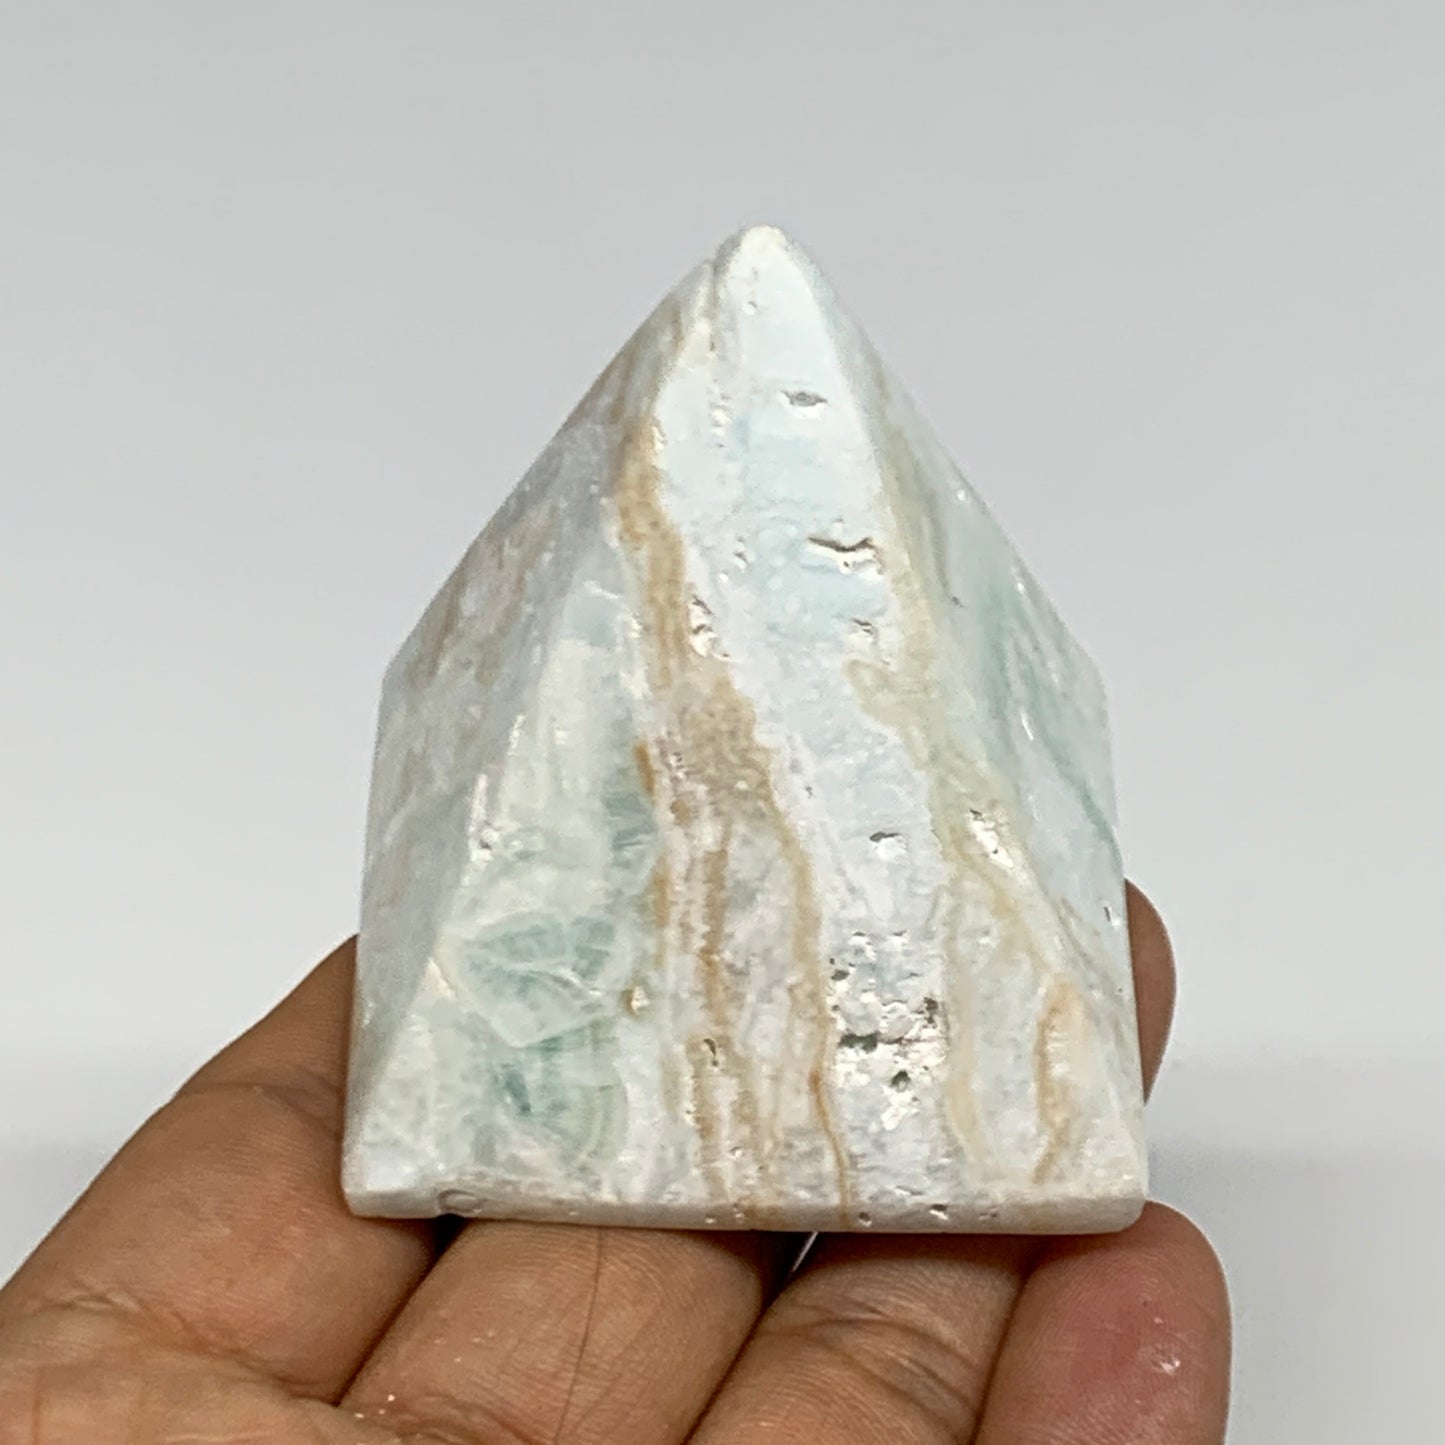 142.6g, 2.2"x1.9"x1.9", Caribbean Calcite Pyramid Gemstone, Crystal, B29792